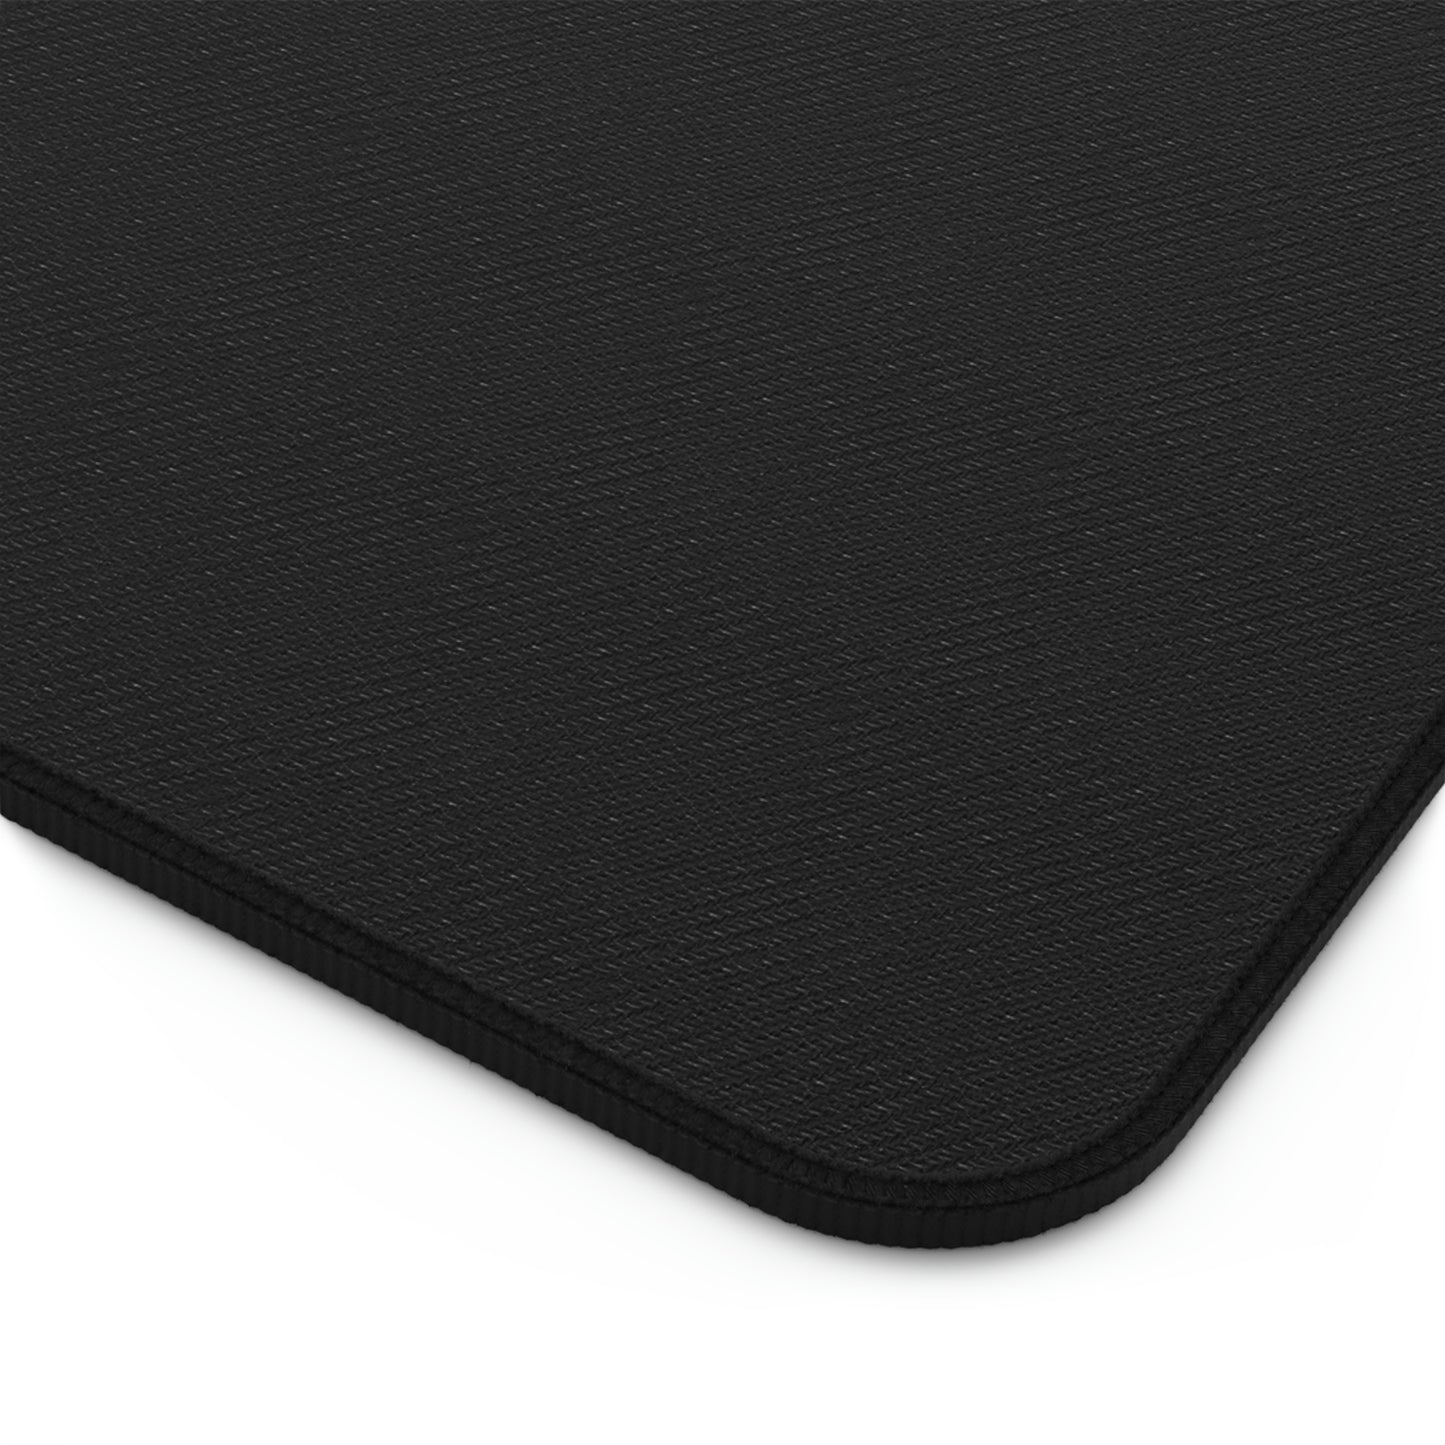 The black rubber bottom of a black topographic desk mat.